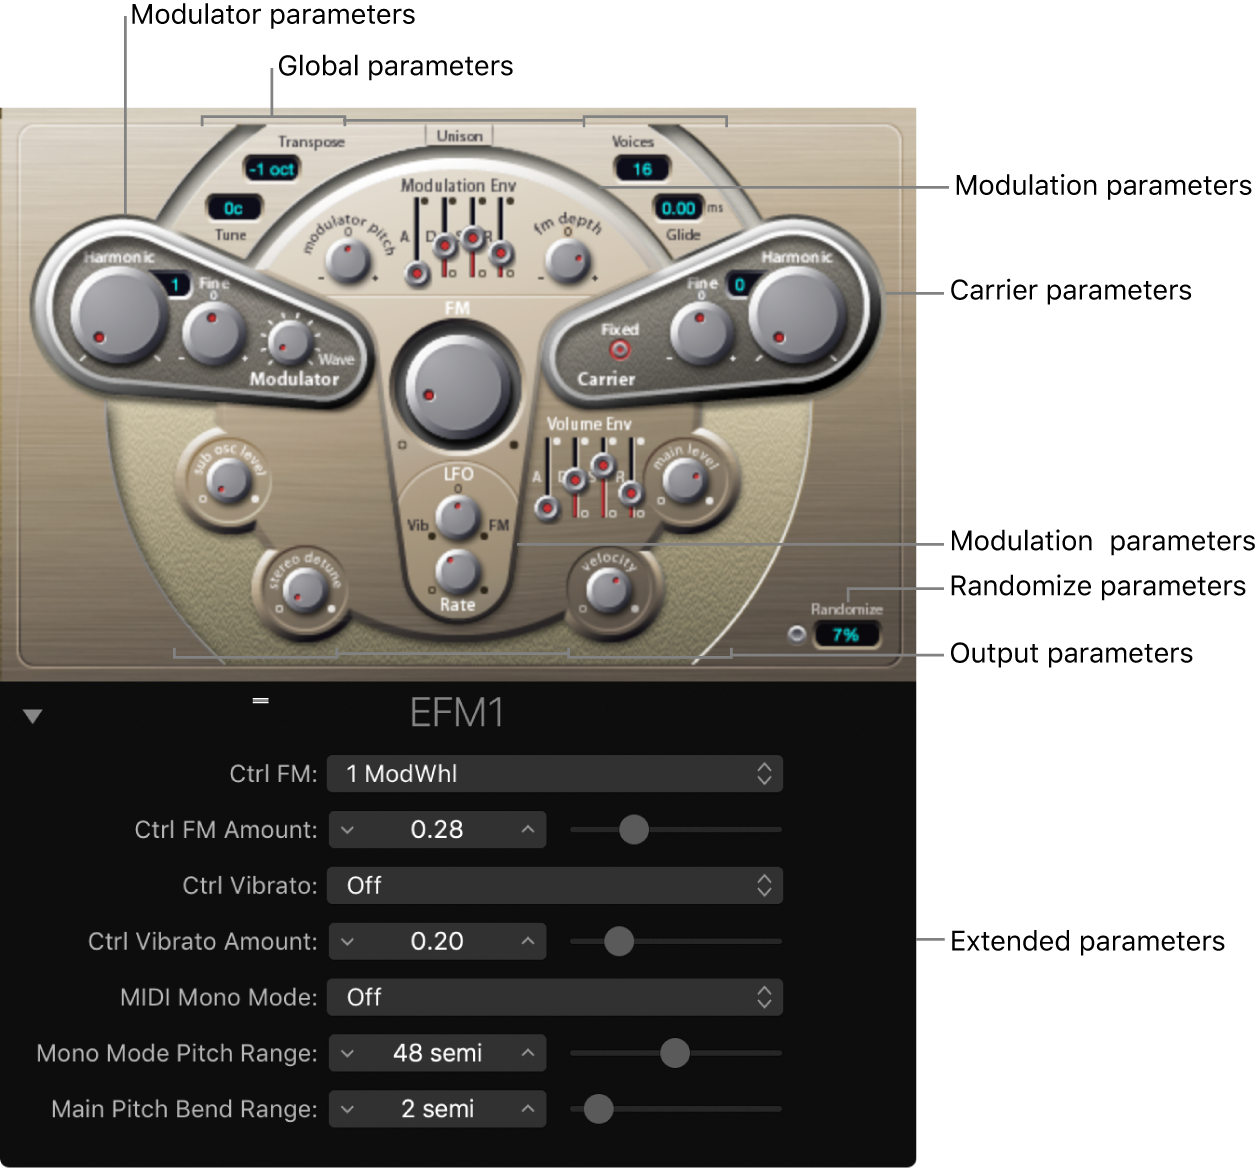 Figure. EFM1 window showing main interface areas.